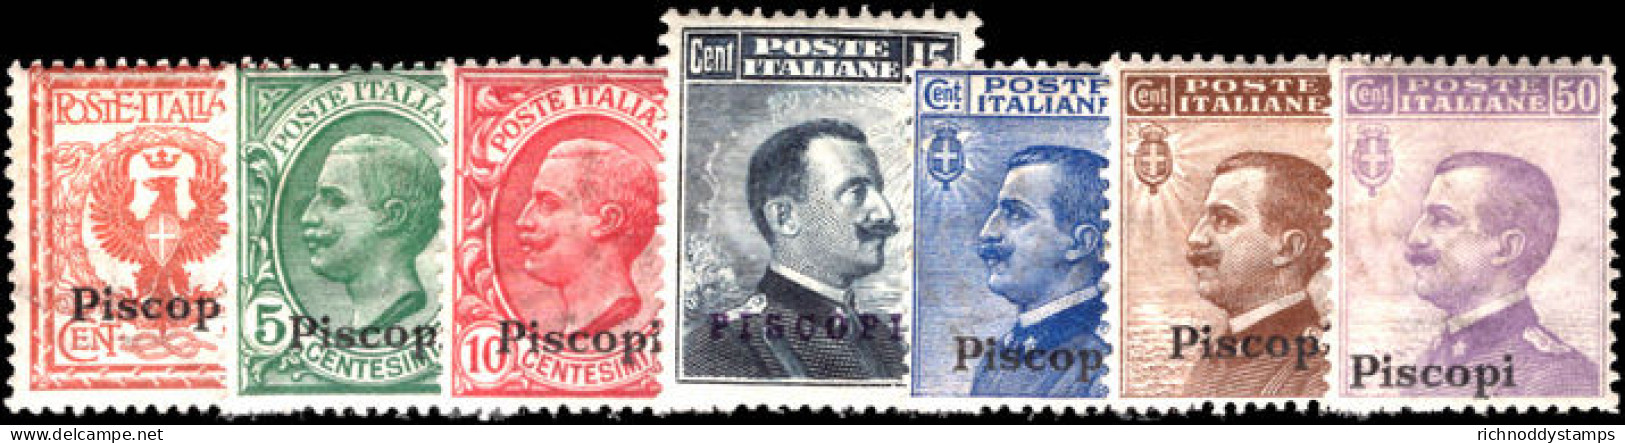 Piscopi 1912 Set Of Original Values Fine Lightly Mounted Mint. - Aegean (Piscopi)